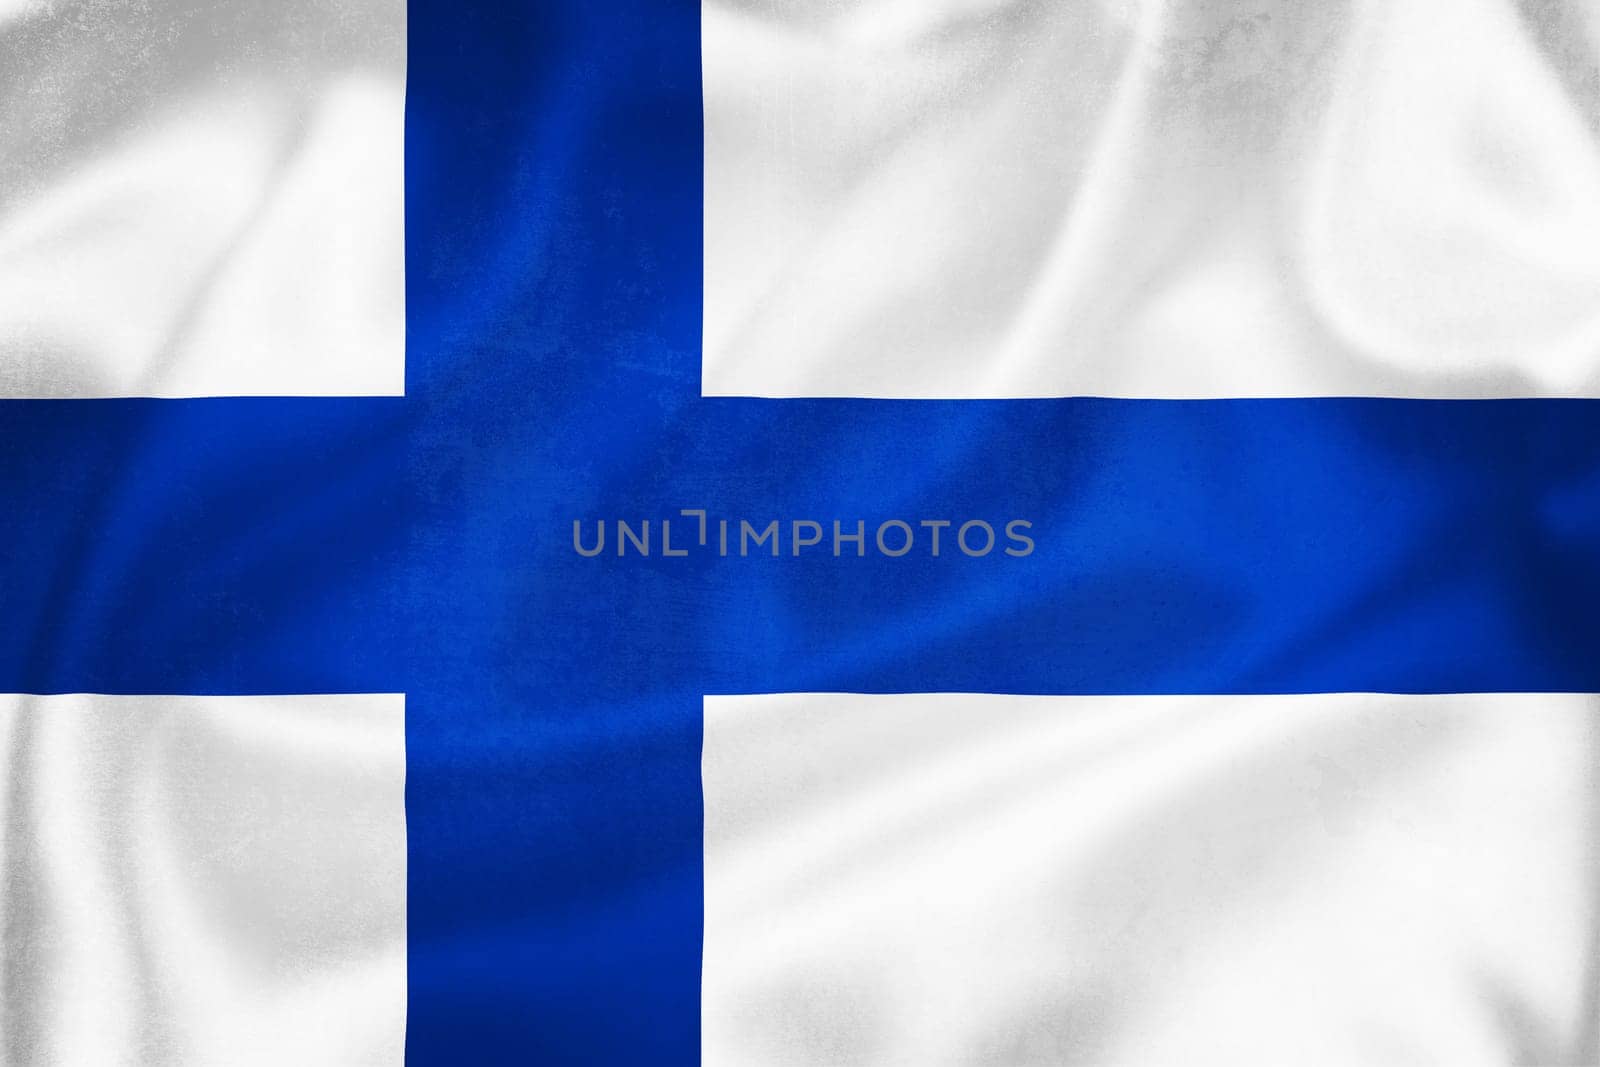 Grunge 3D illustration of Finland flag by xbrchx